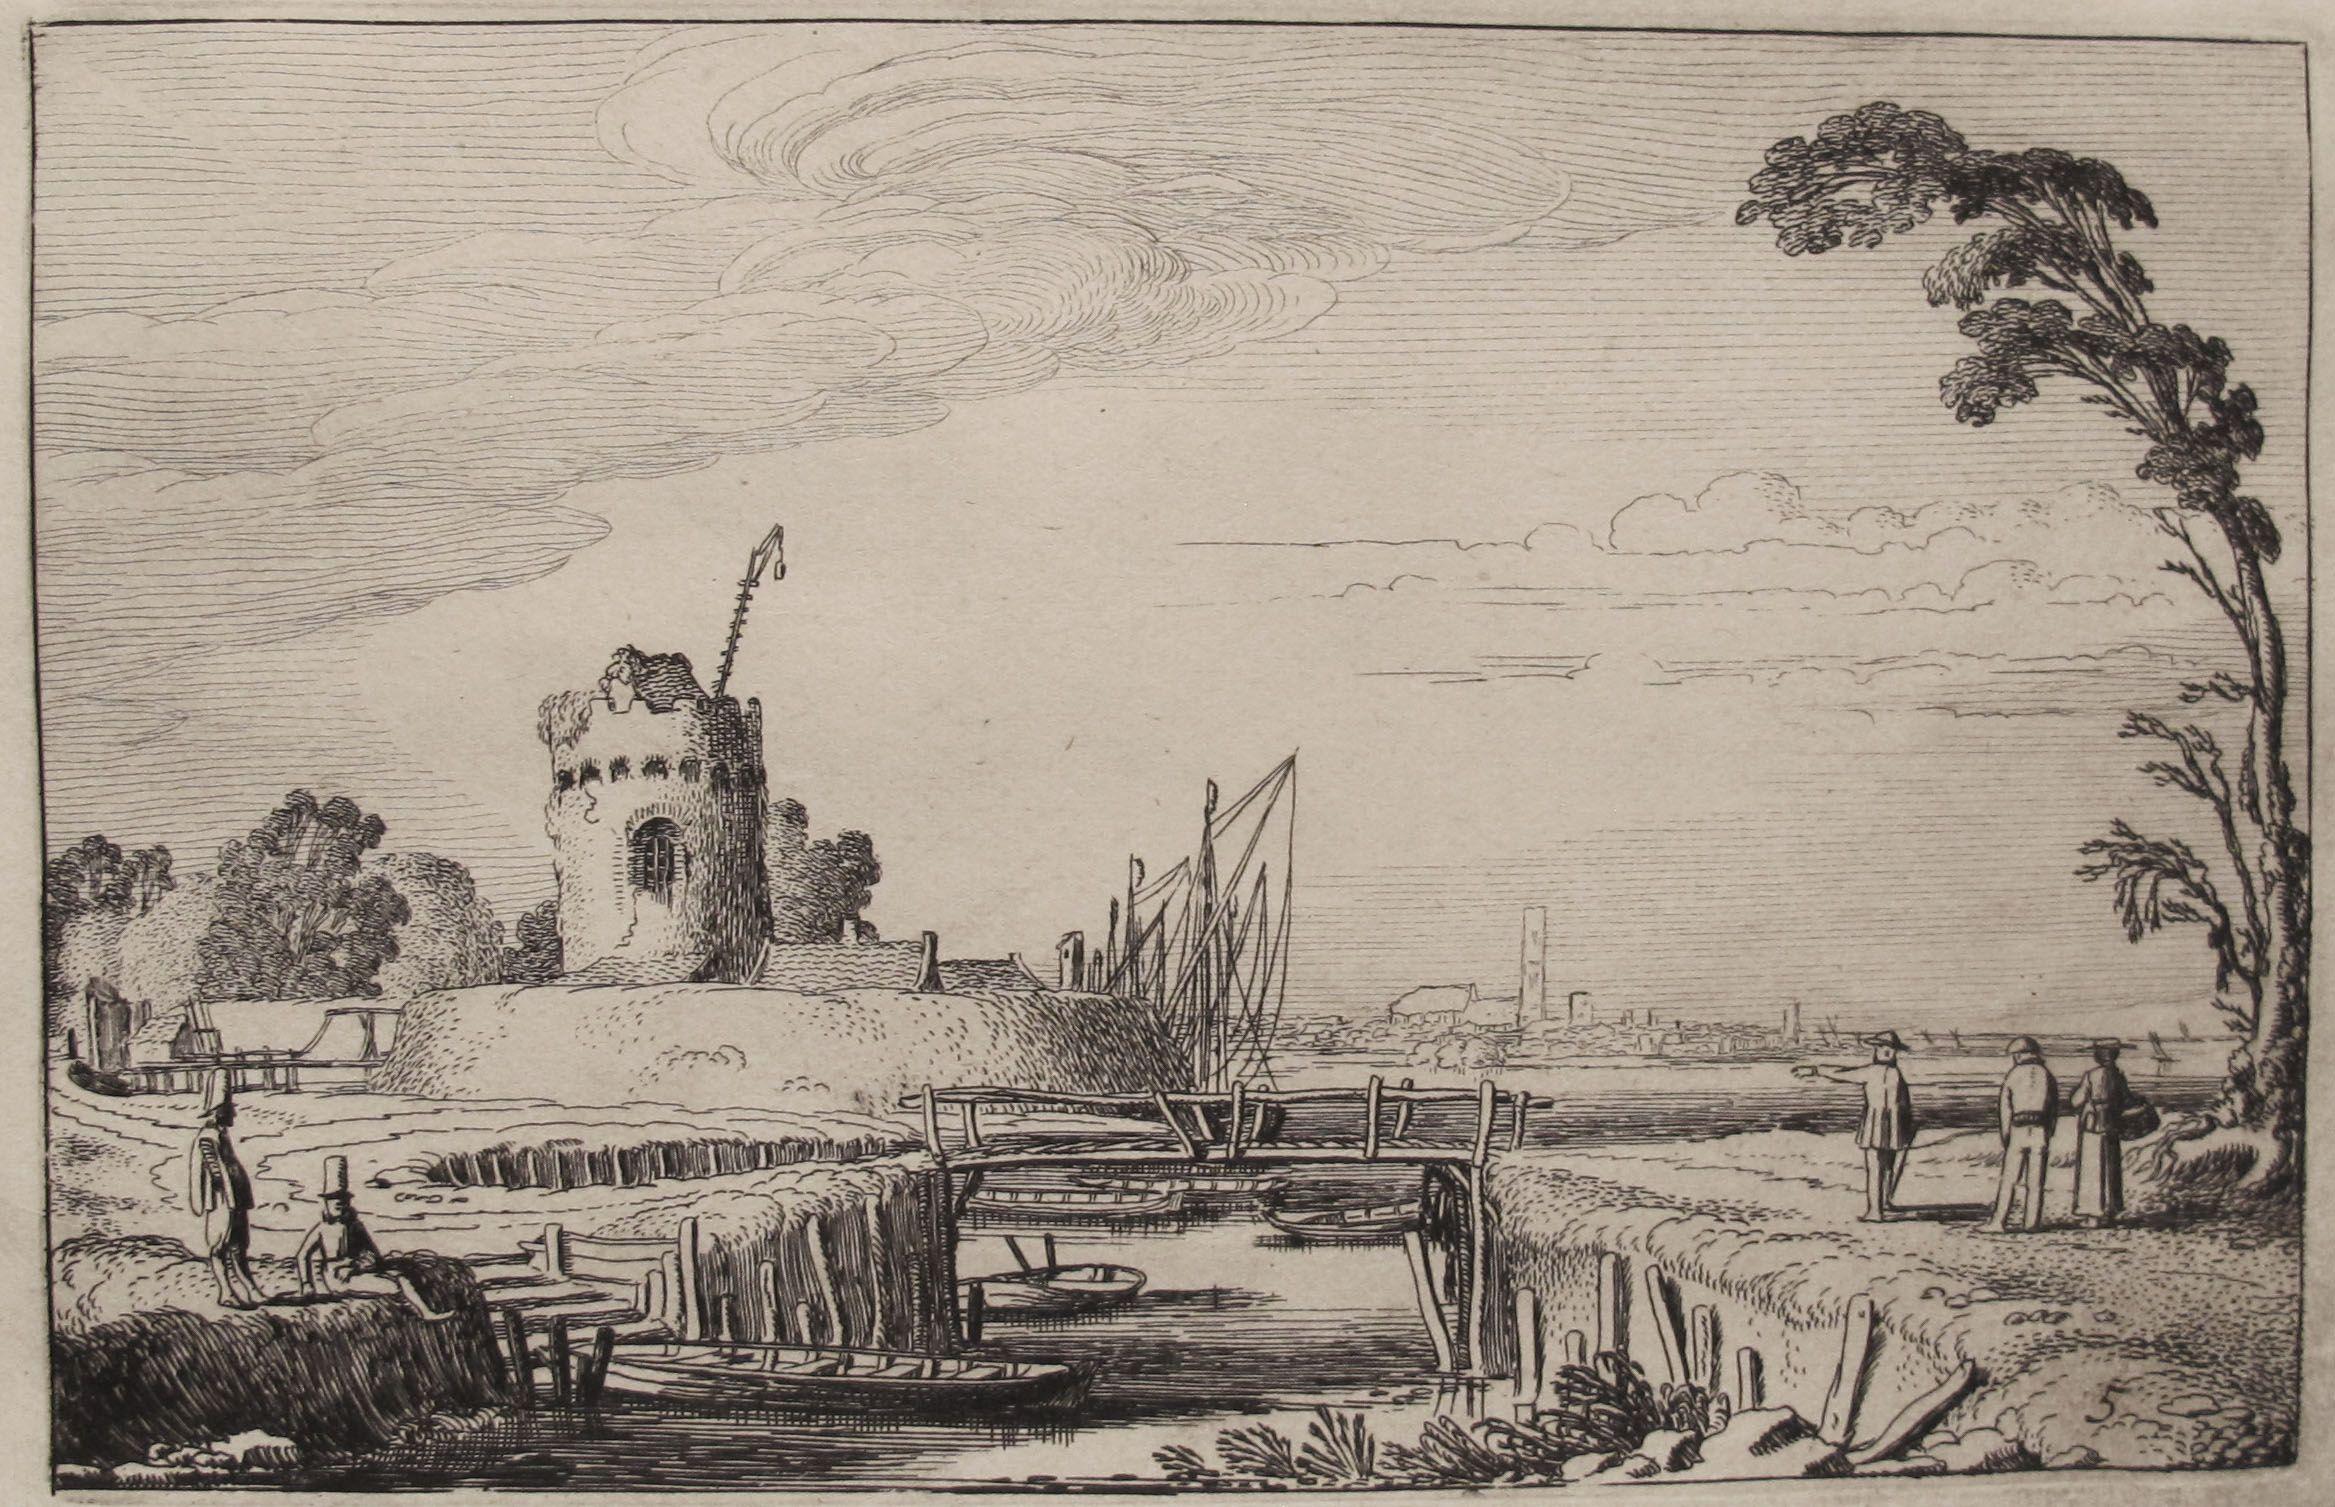 Jan Van de Velde Landscape Print - The Old Tower as a Lighthouse